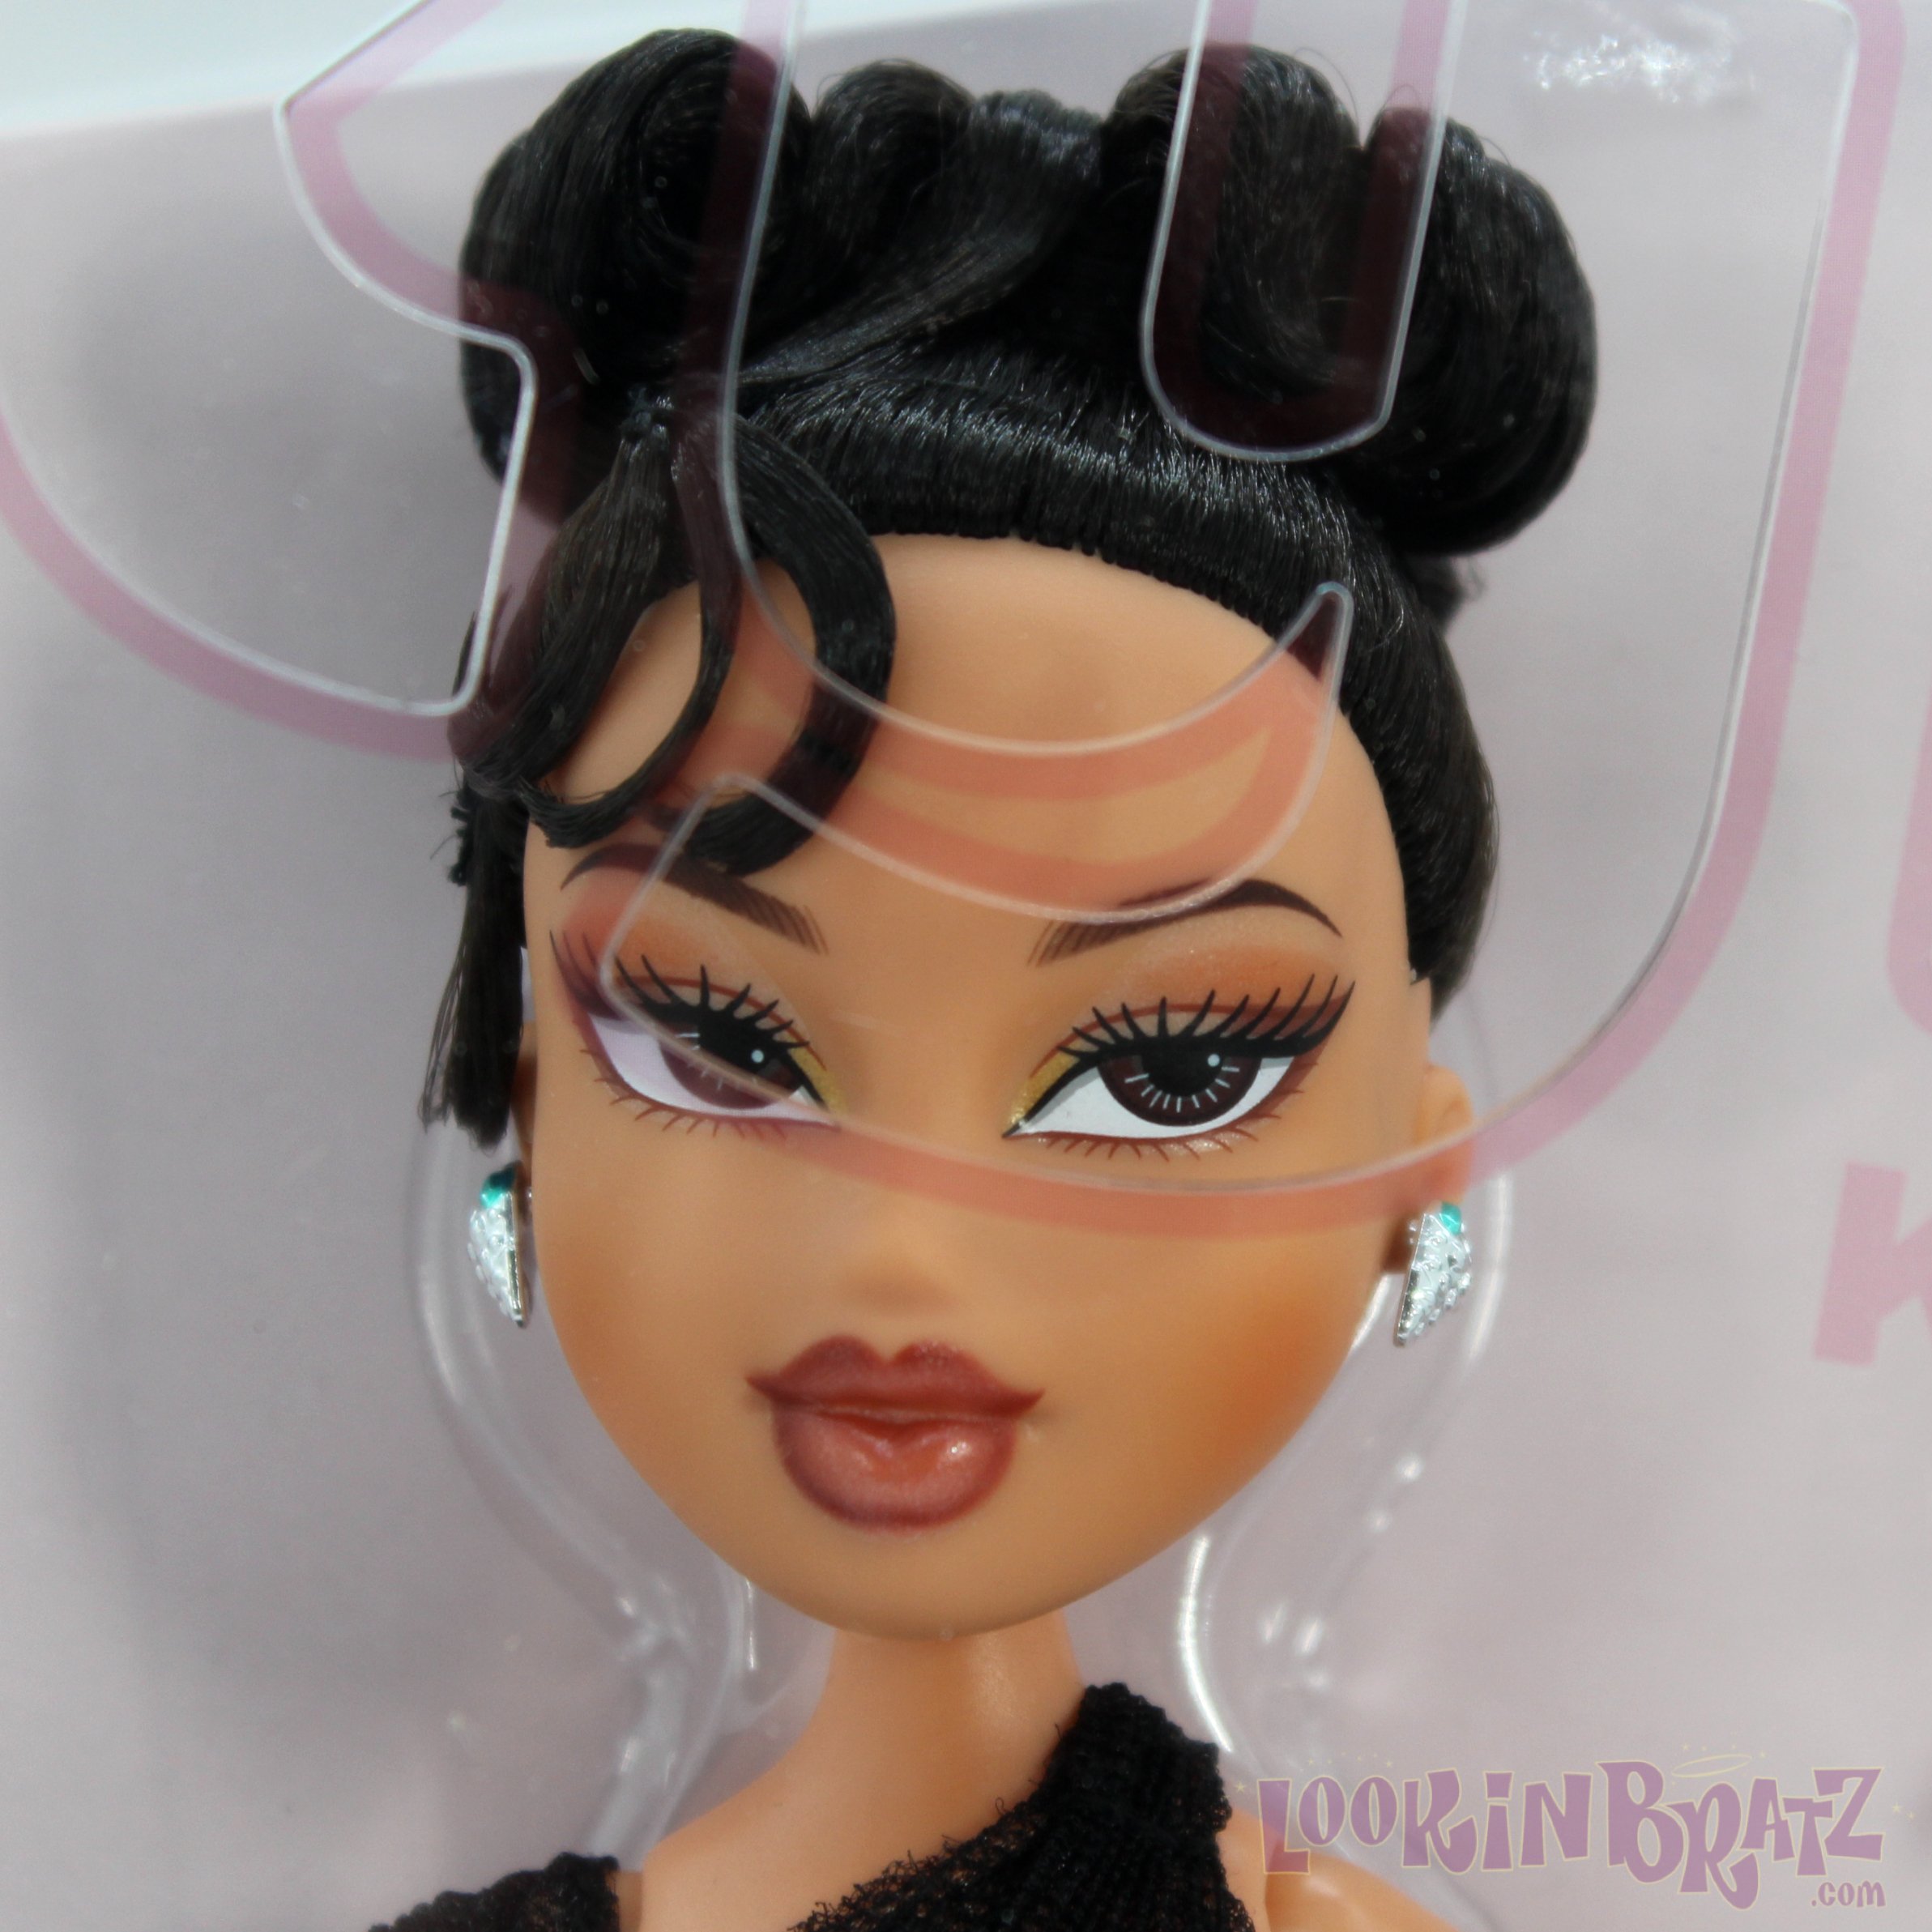 Bratz x Kylie Jenner Night Doll Packaging (Face Close-Up)